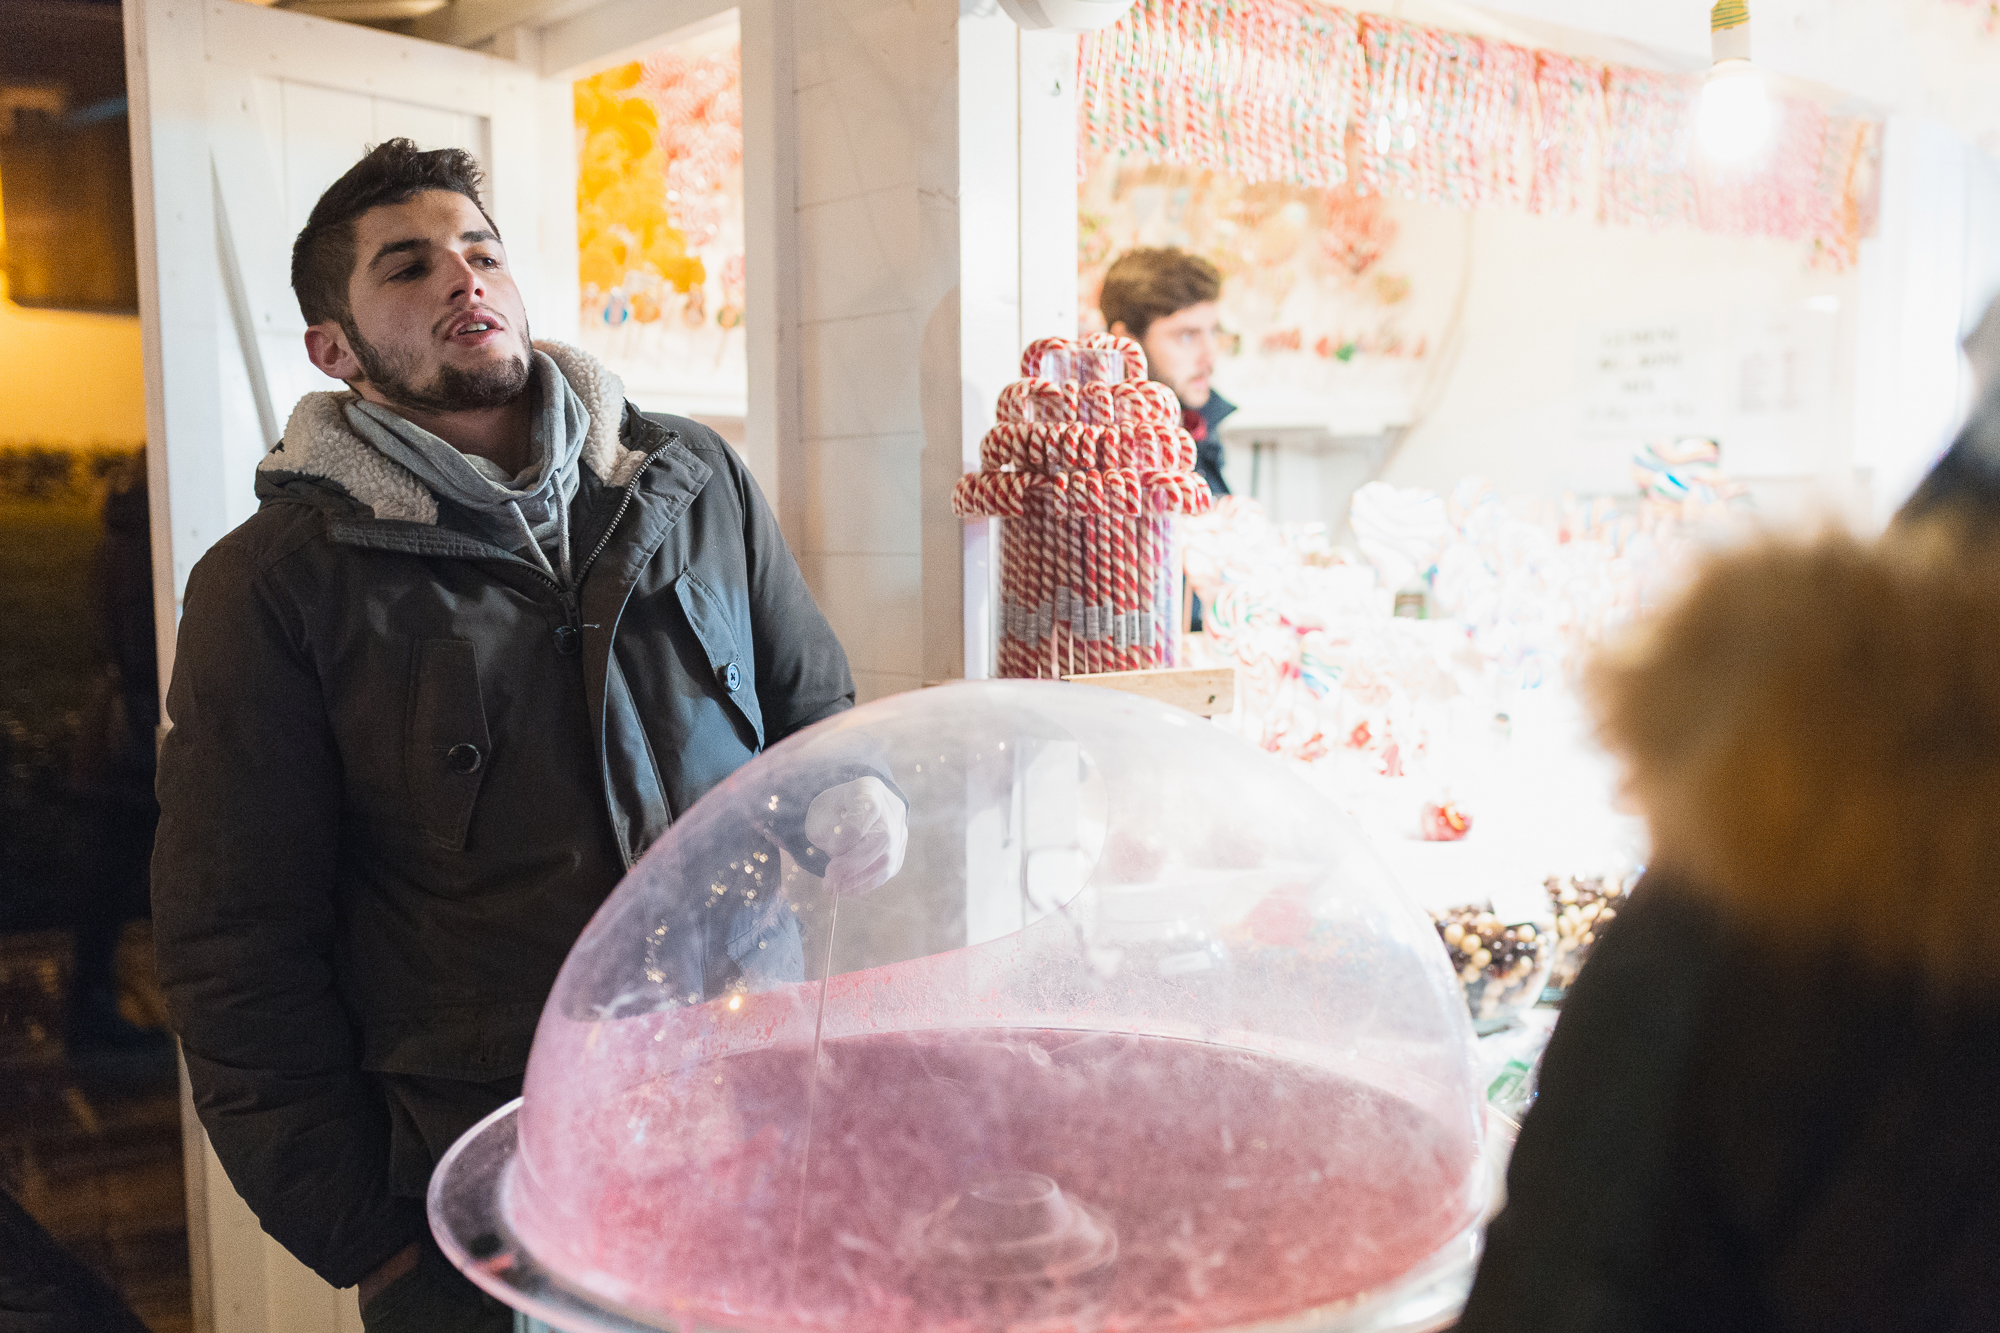 Vendor at the Zagreb Christmas market in Croatia